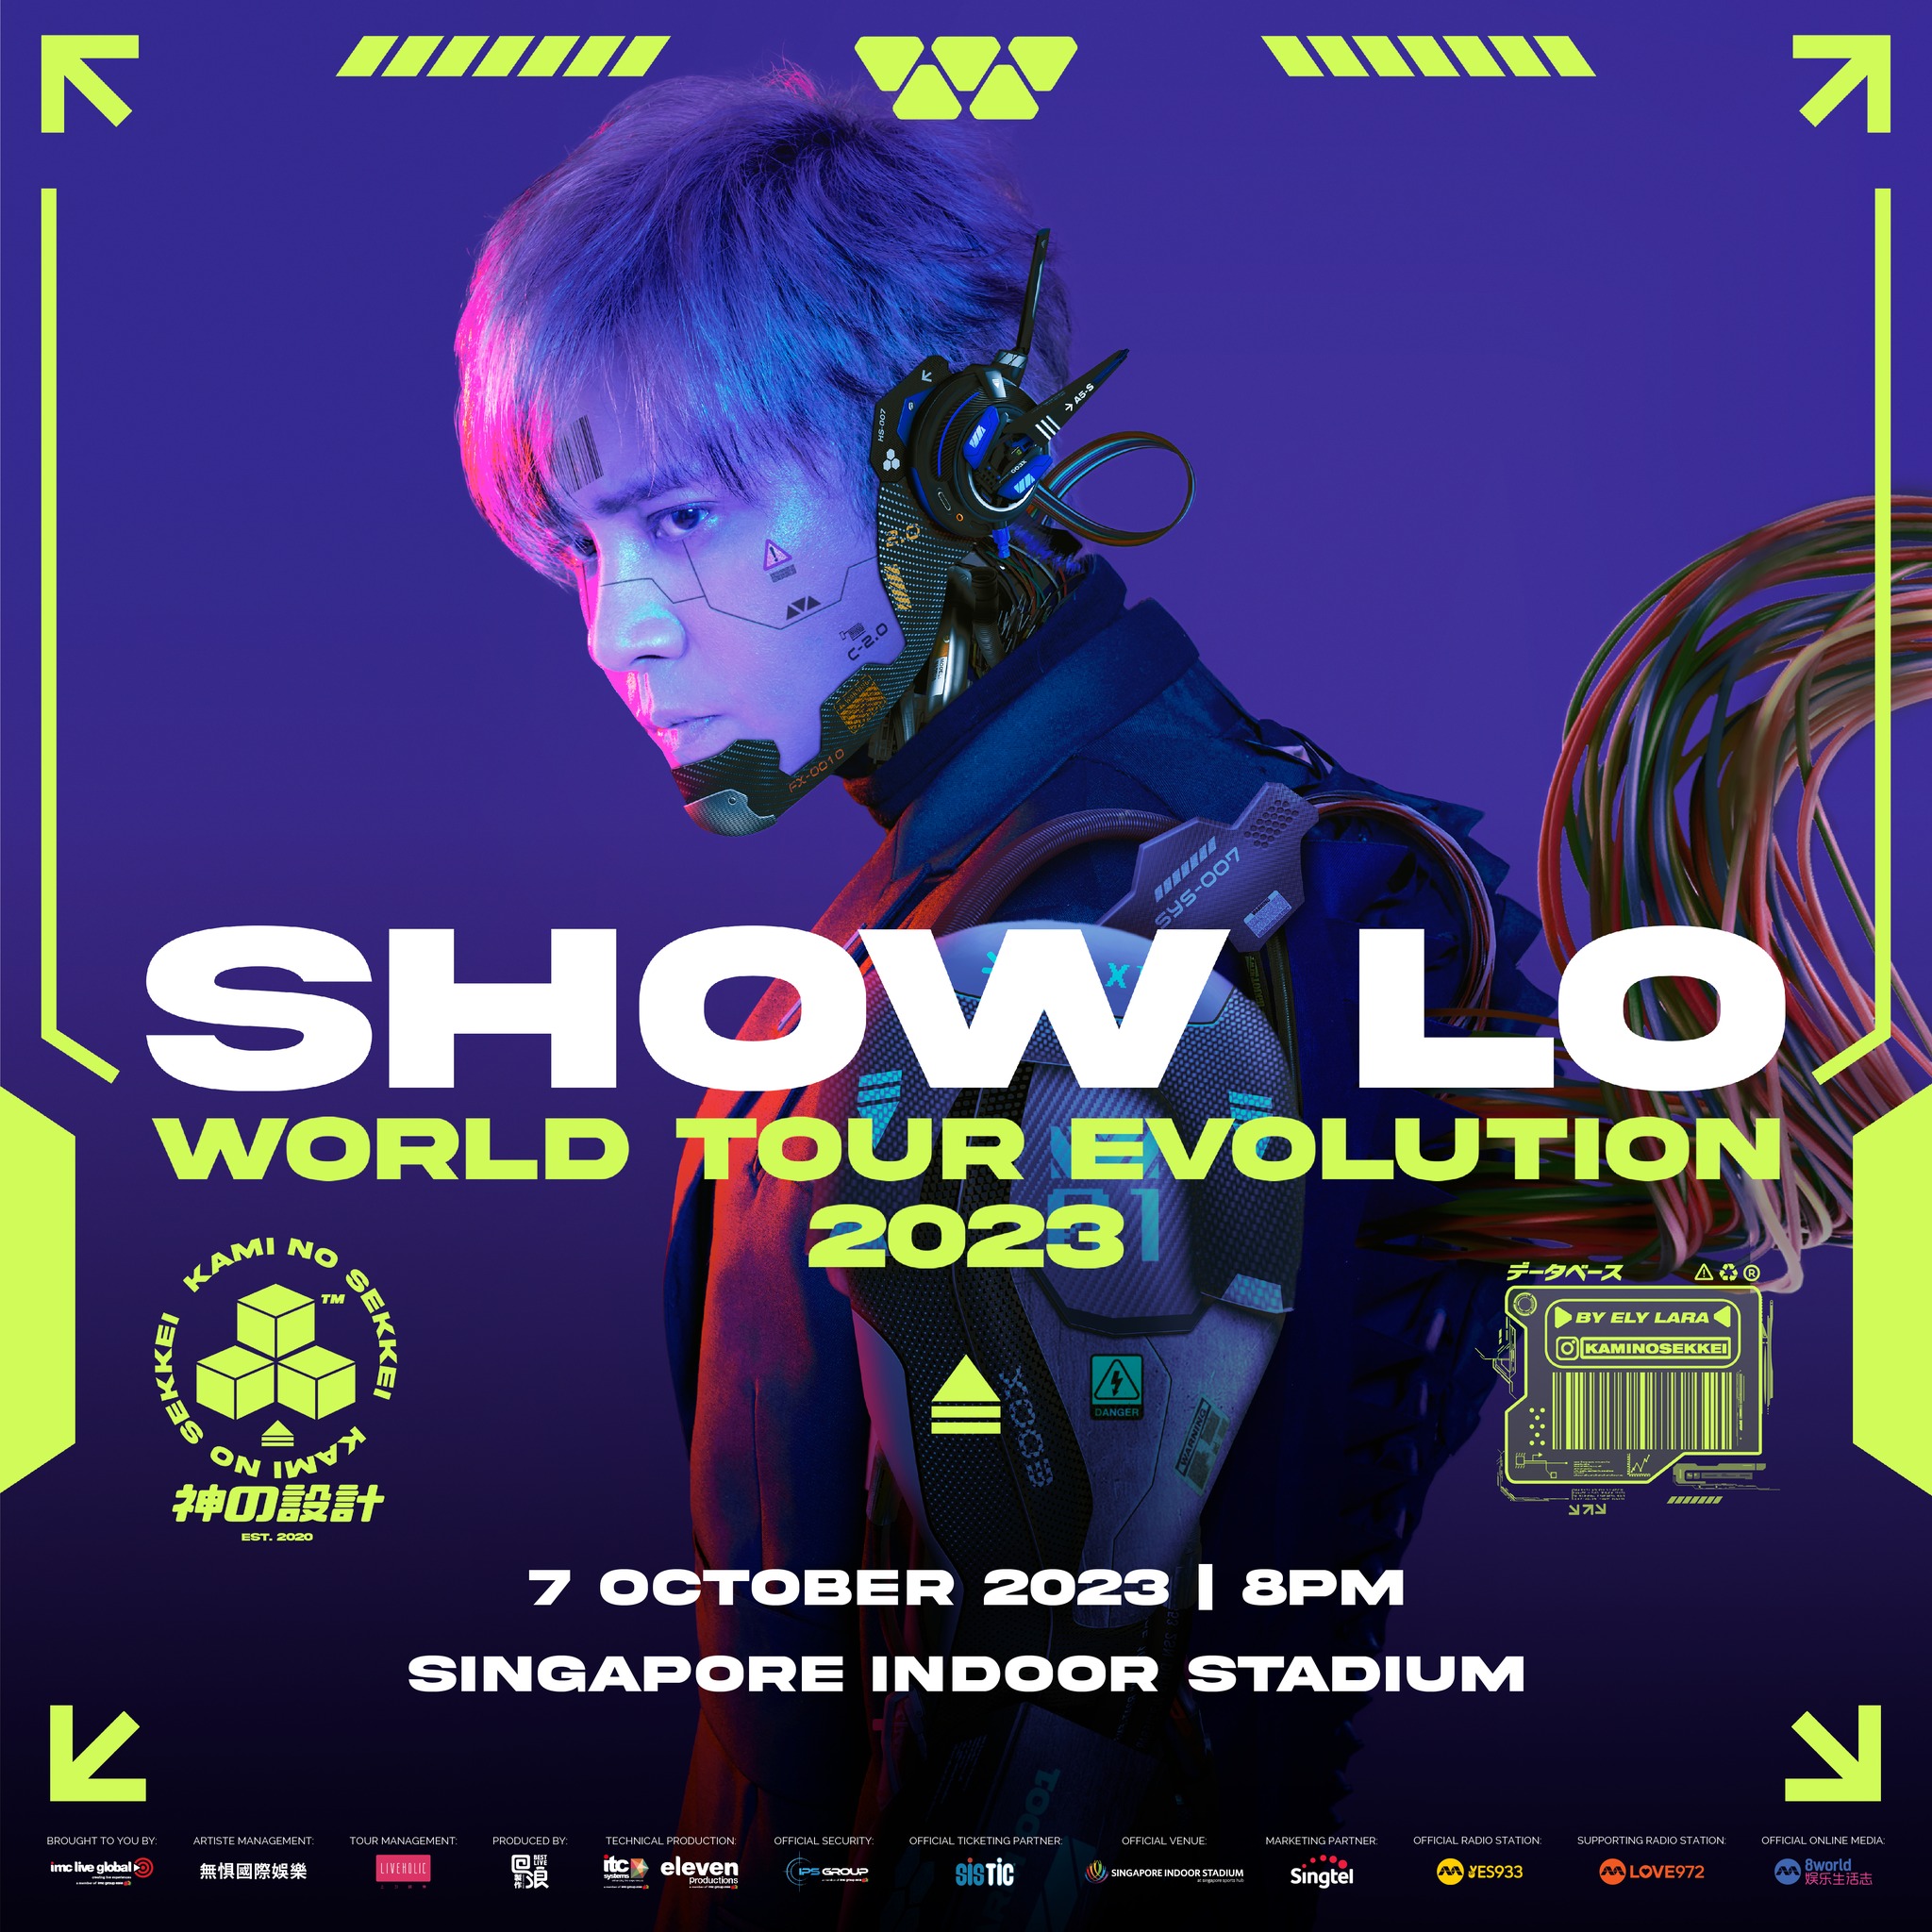 Show Lo World Tour Evolution 2023 in Singapore Concert